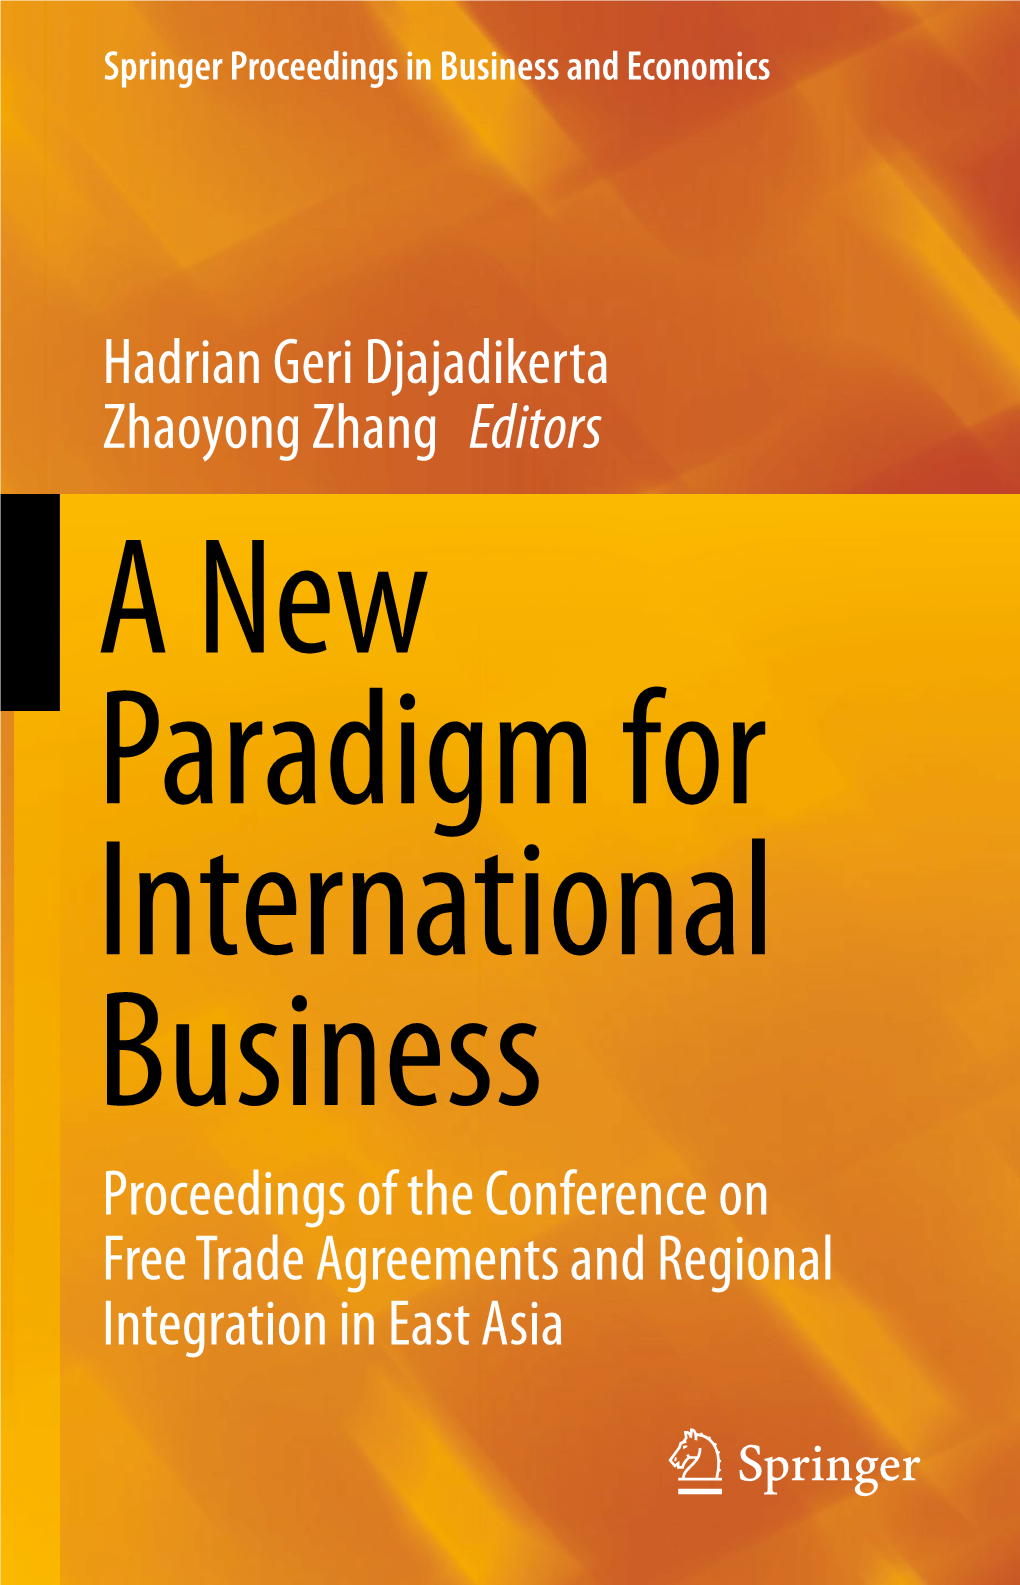 Hadrian Geri Djajadikerta Zhaoyong Zhang Editors Proceedings of The